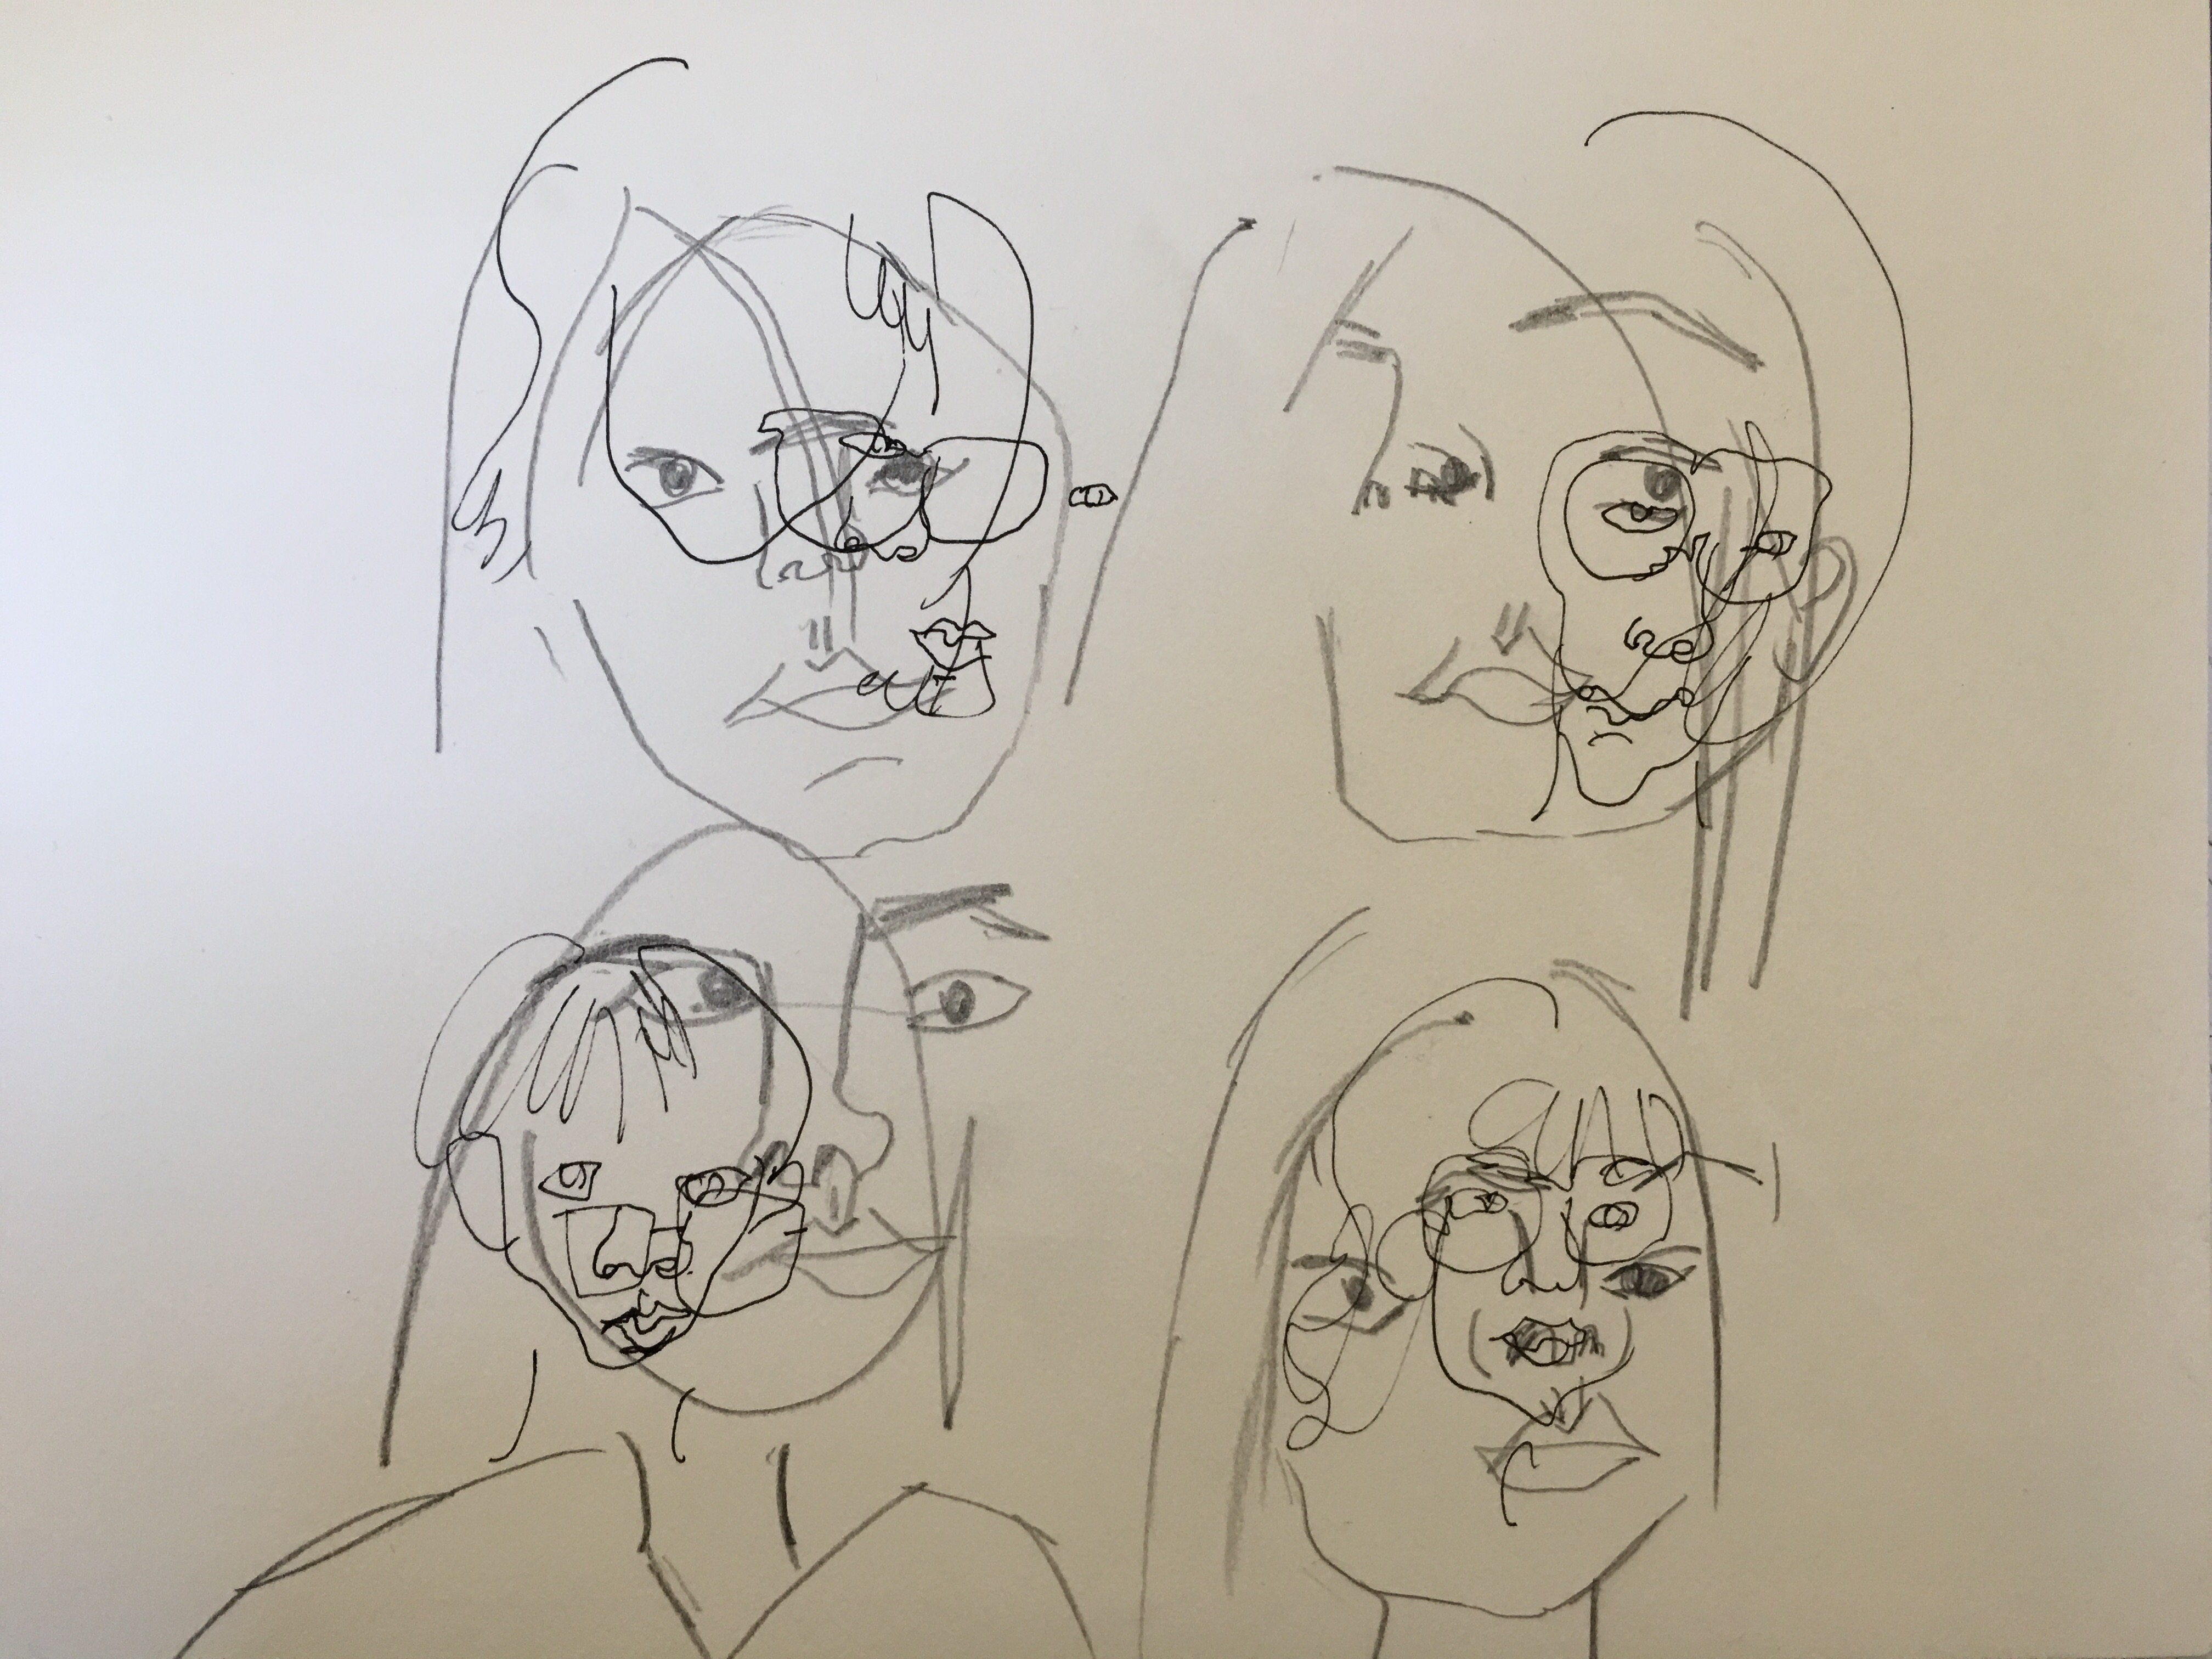 Int Studio: Partnered Blind Self-portraits